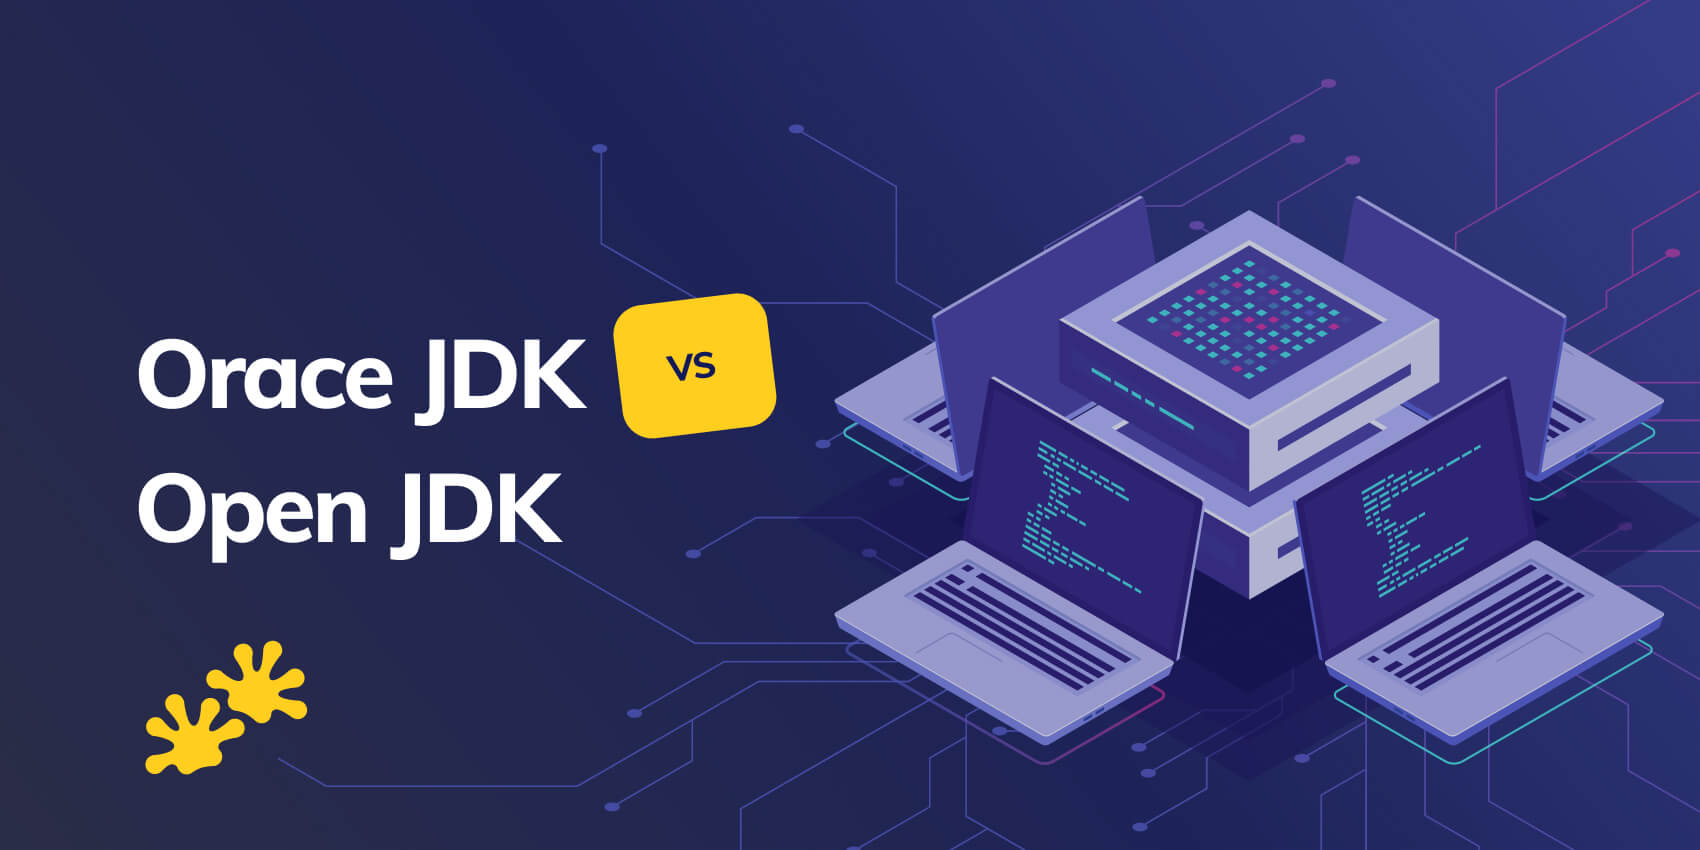 Oracle JDK vs Open JDK